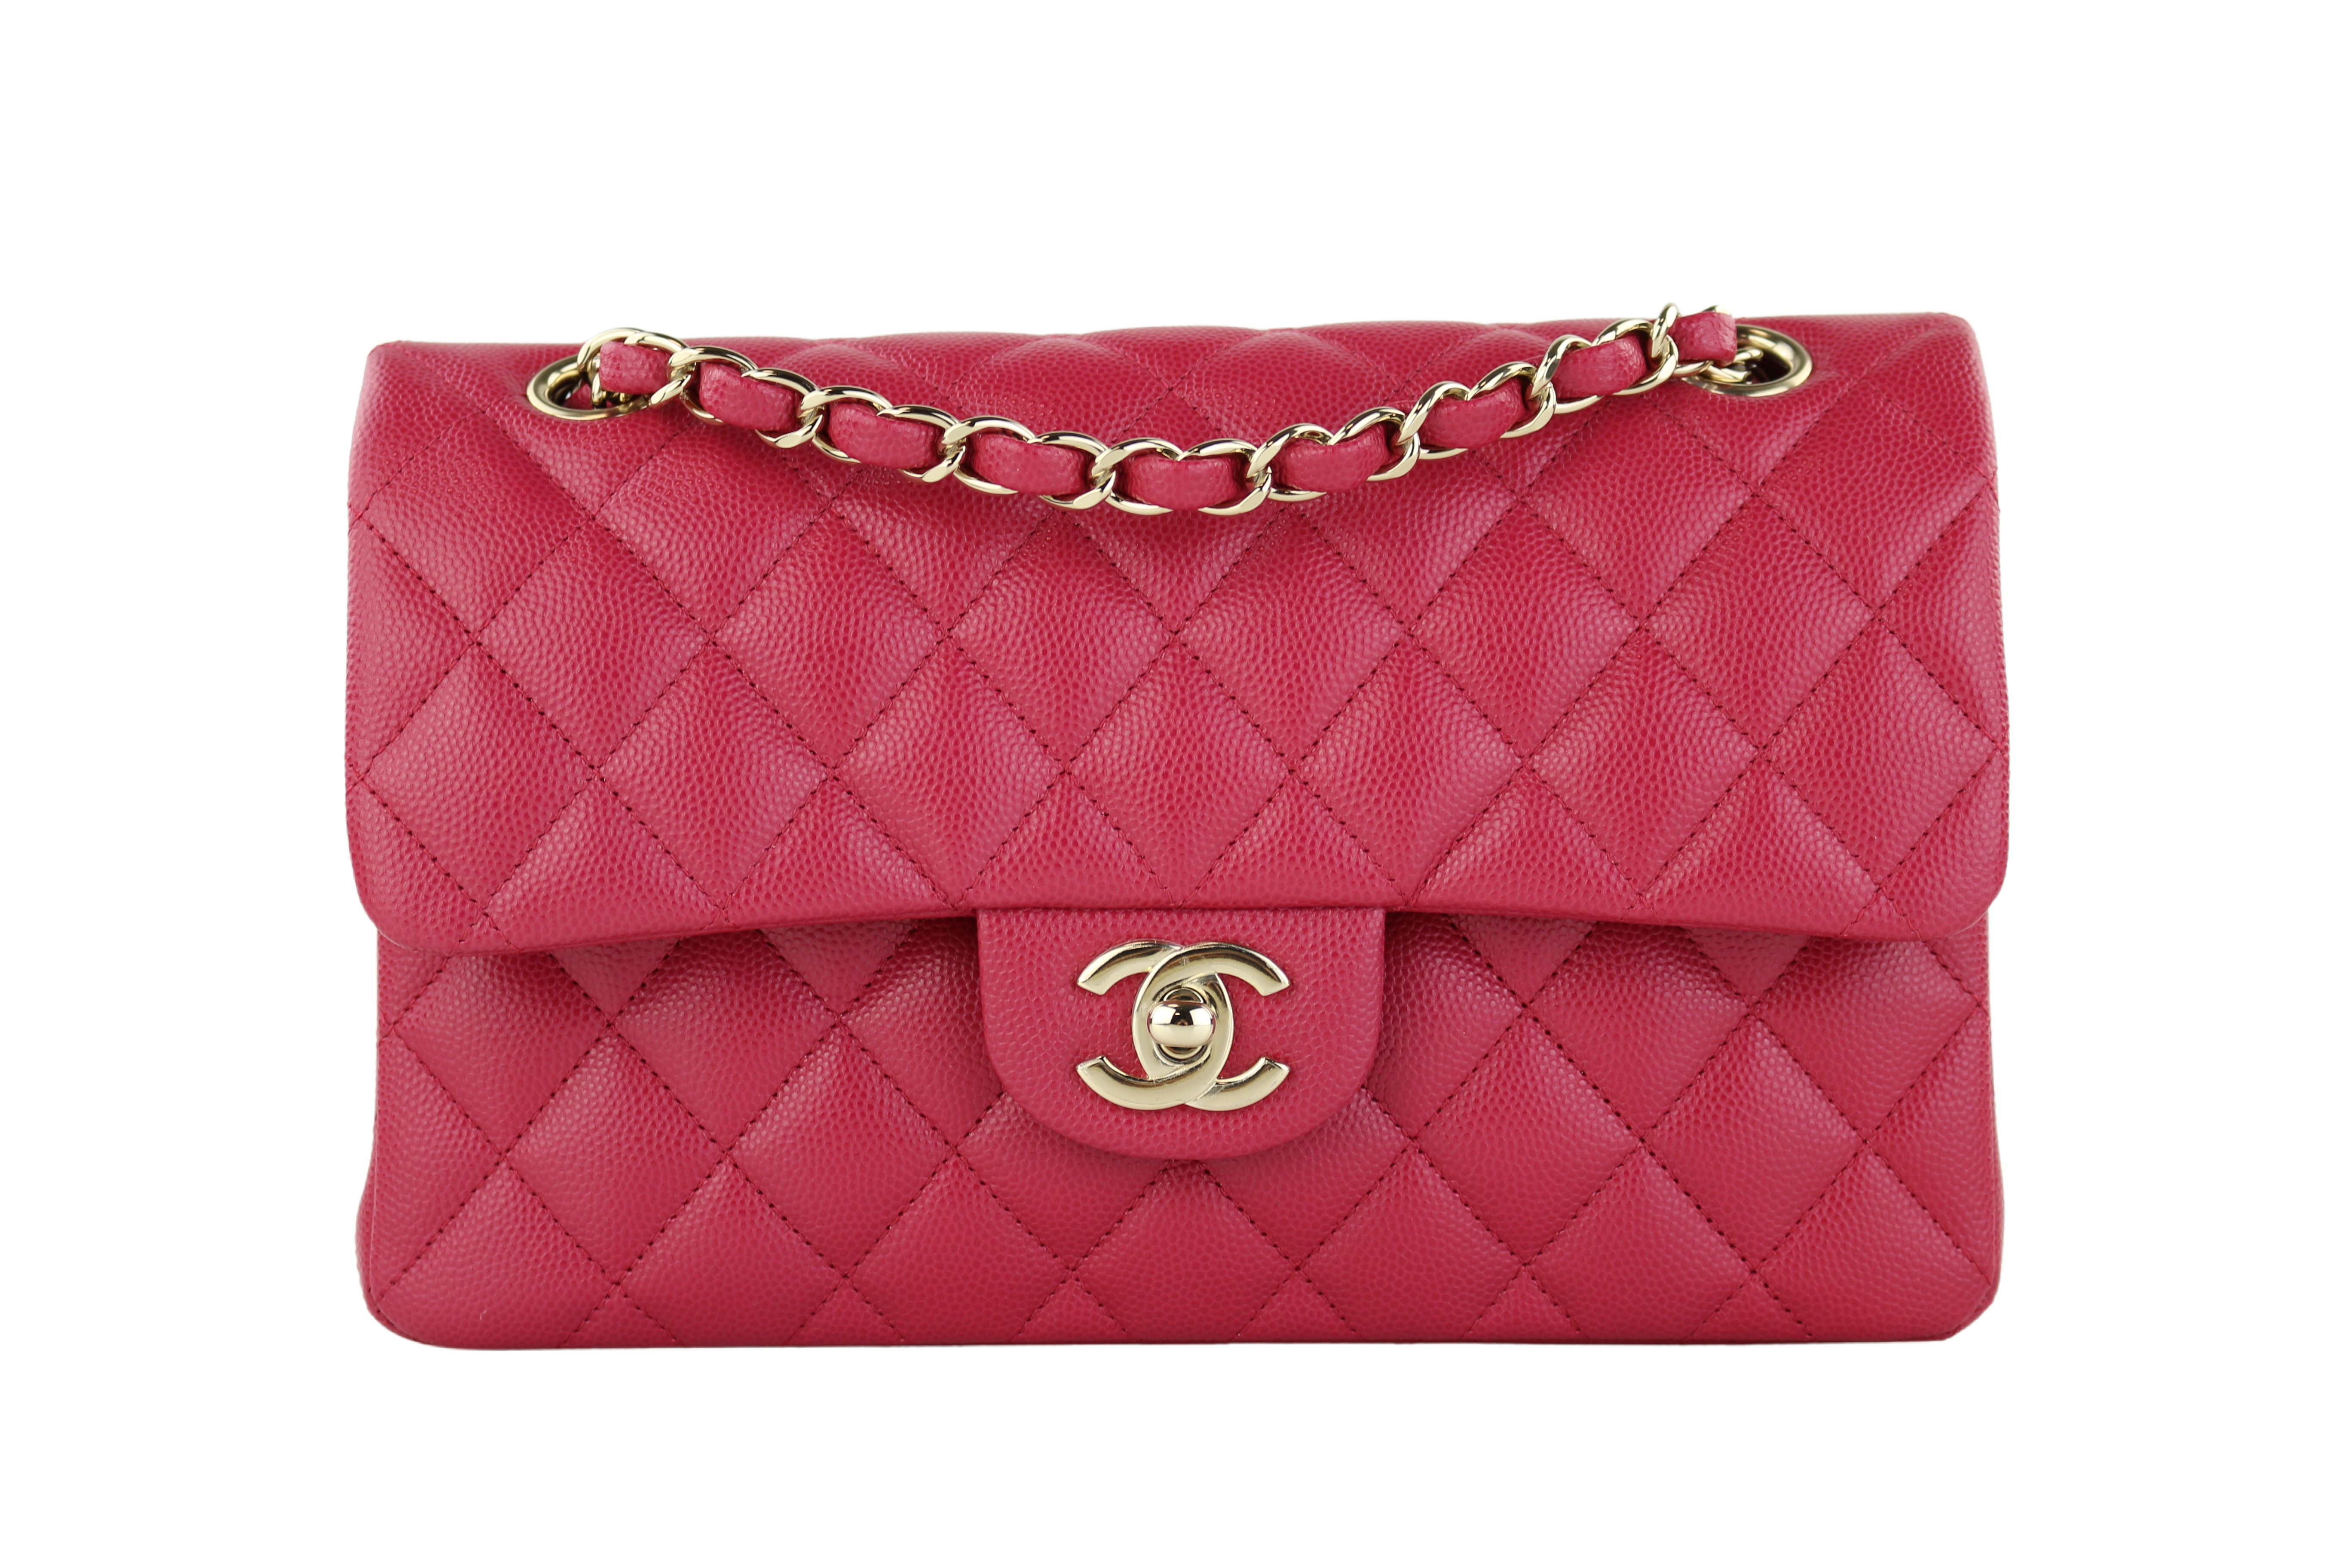 Handbag Reviews (Chloe, Celine, Chanel) - Extra Petite